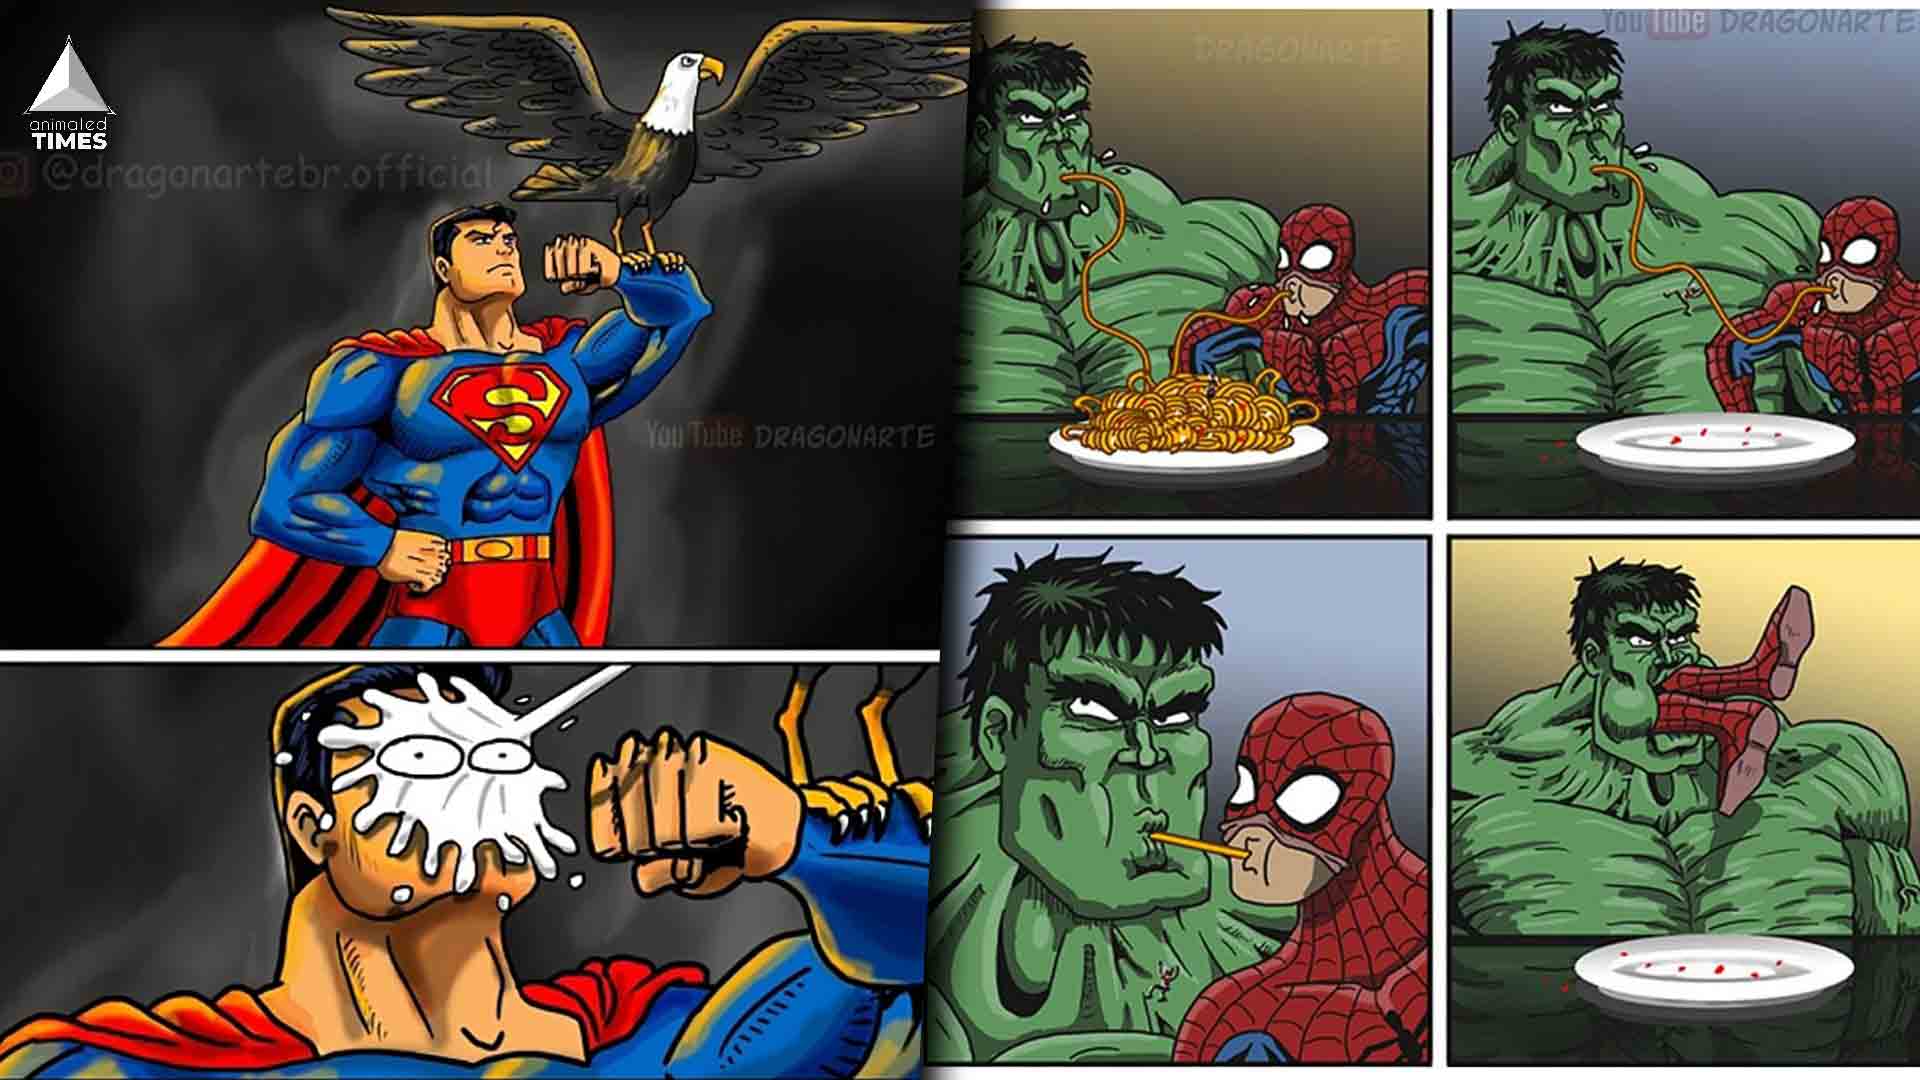 Funny Comics Depicting Daily Struggles Of Superheroes!